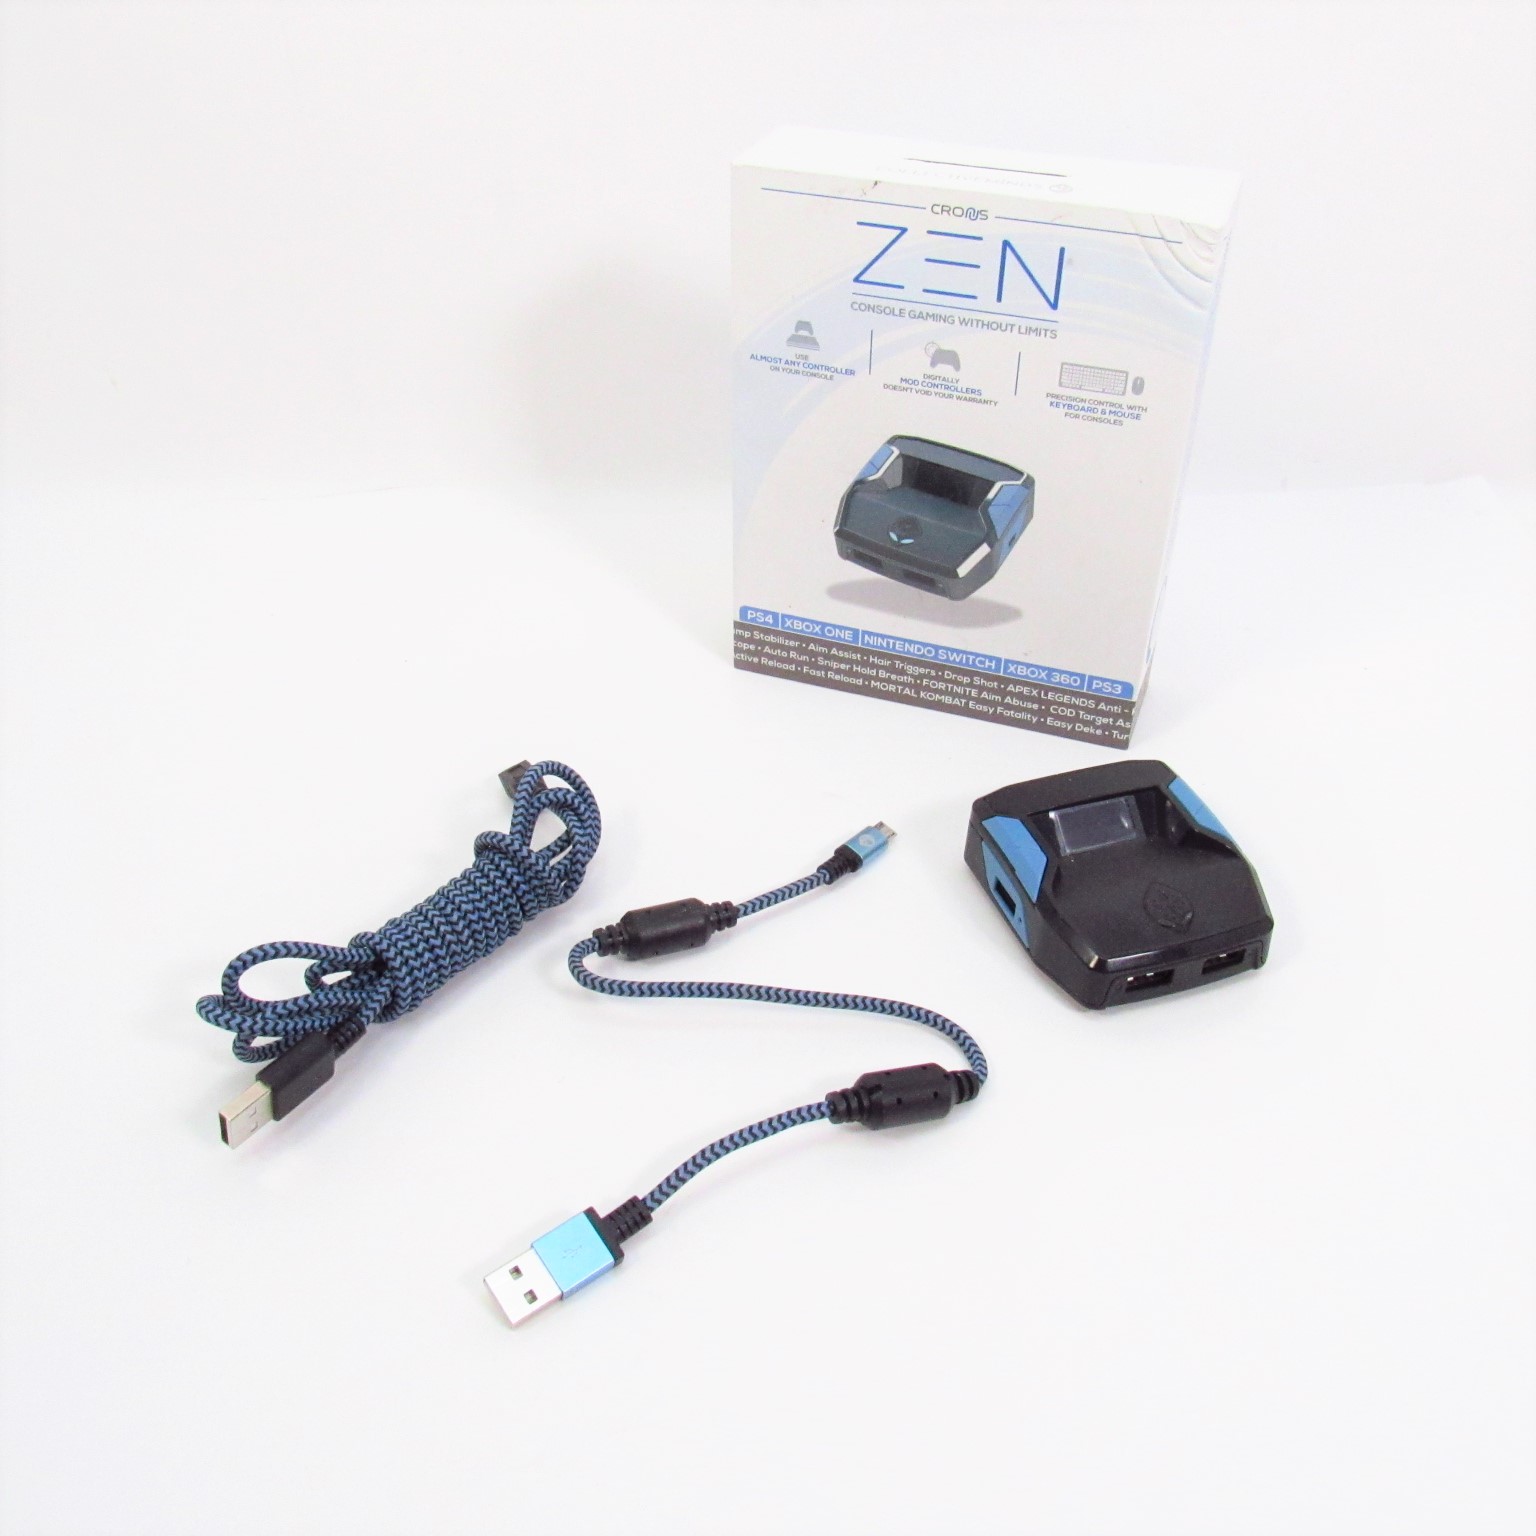 NEW Cronus Zen Controller Emulator Xbox Playstation Nintendo and PC FREE  SHIP